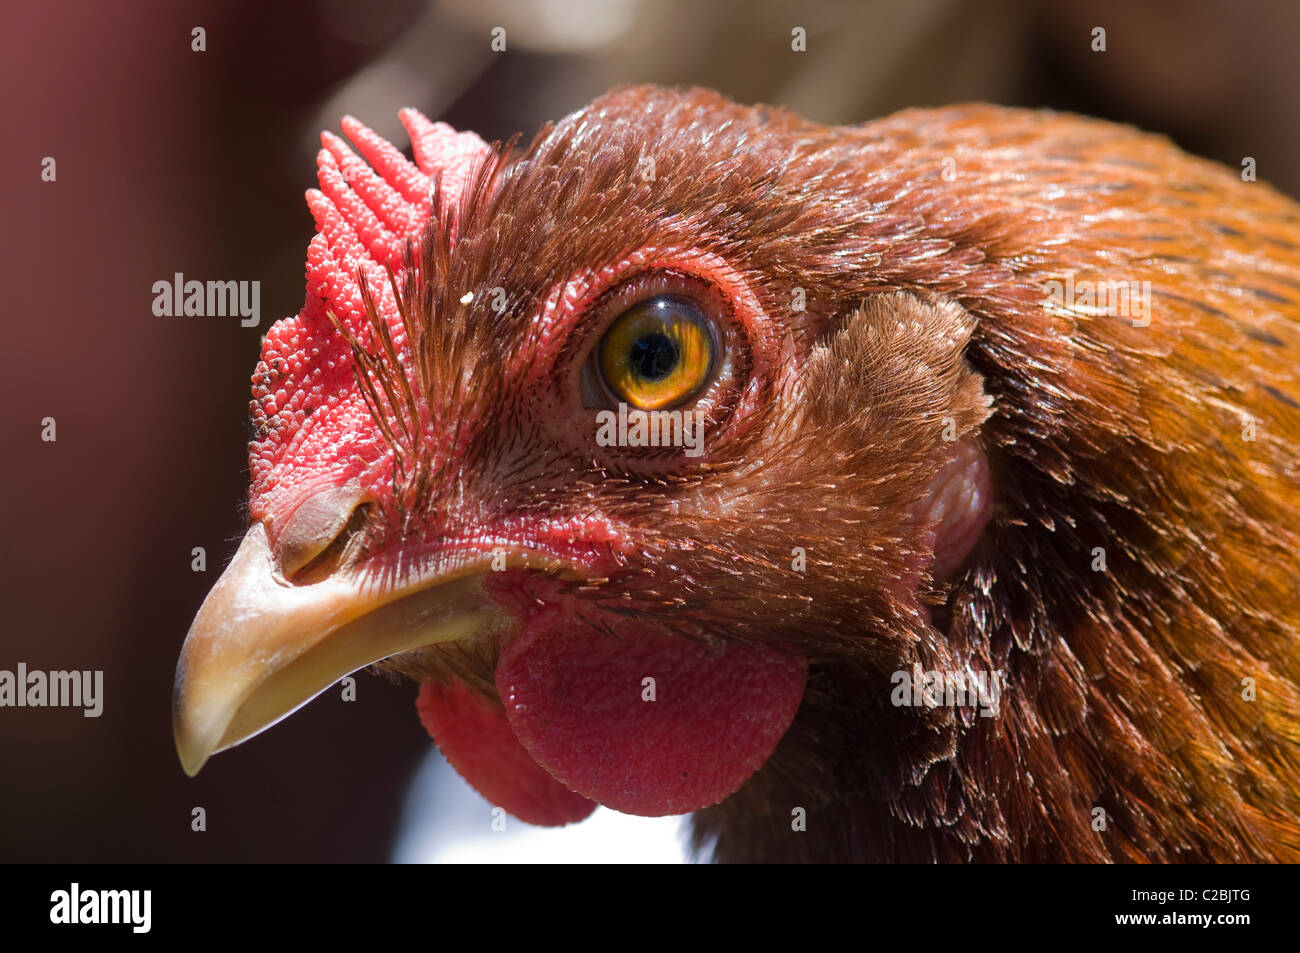 Close up of a Red Welsummer hen. Stock Photo